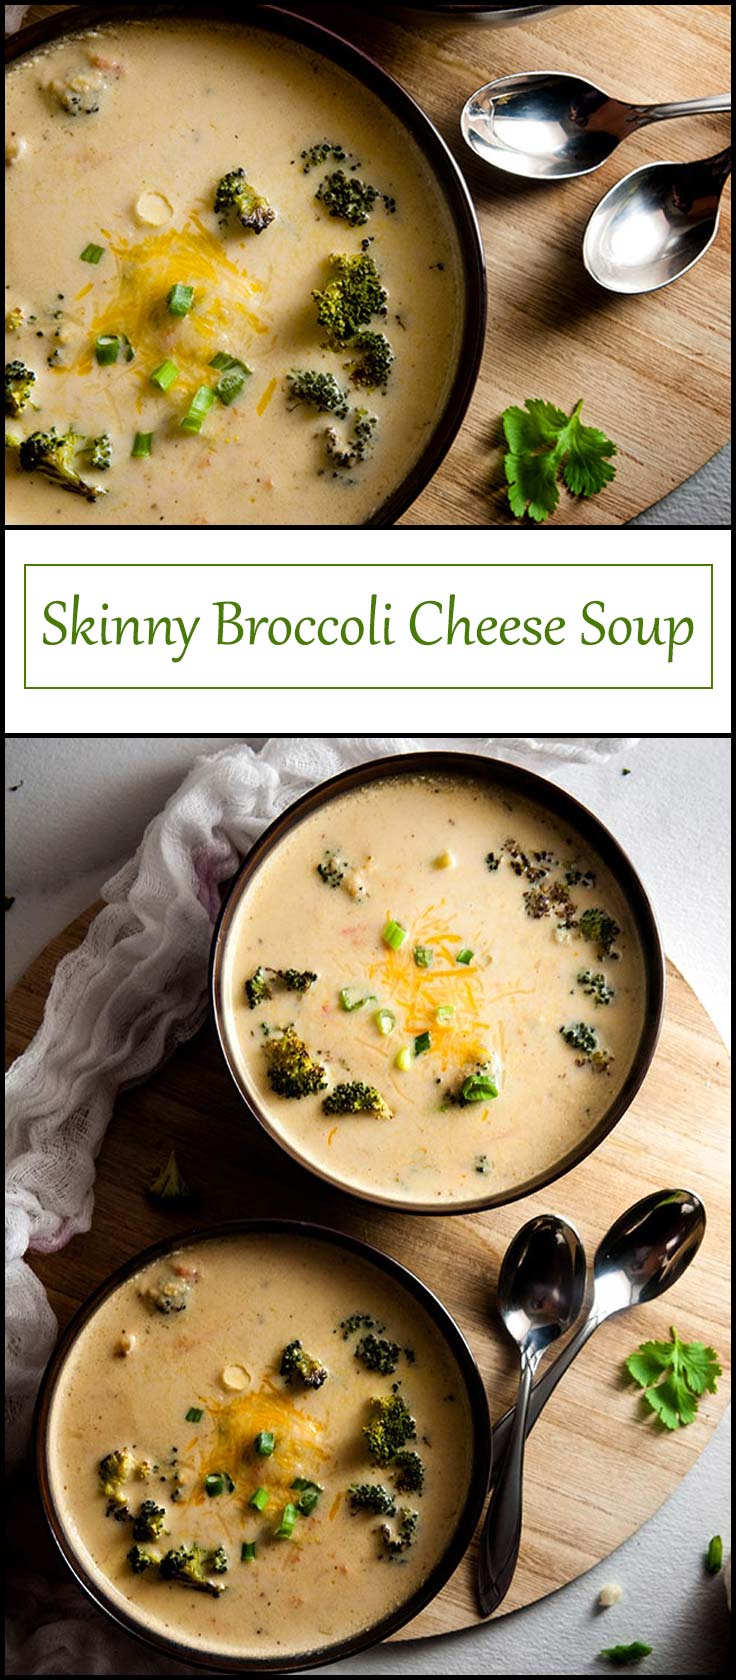 Skinny Broccoli Cheese Soup with Hidden Veggies from www.seasonedsprinkles.com